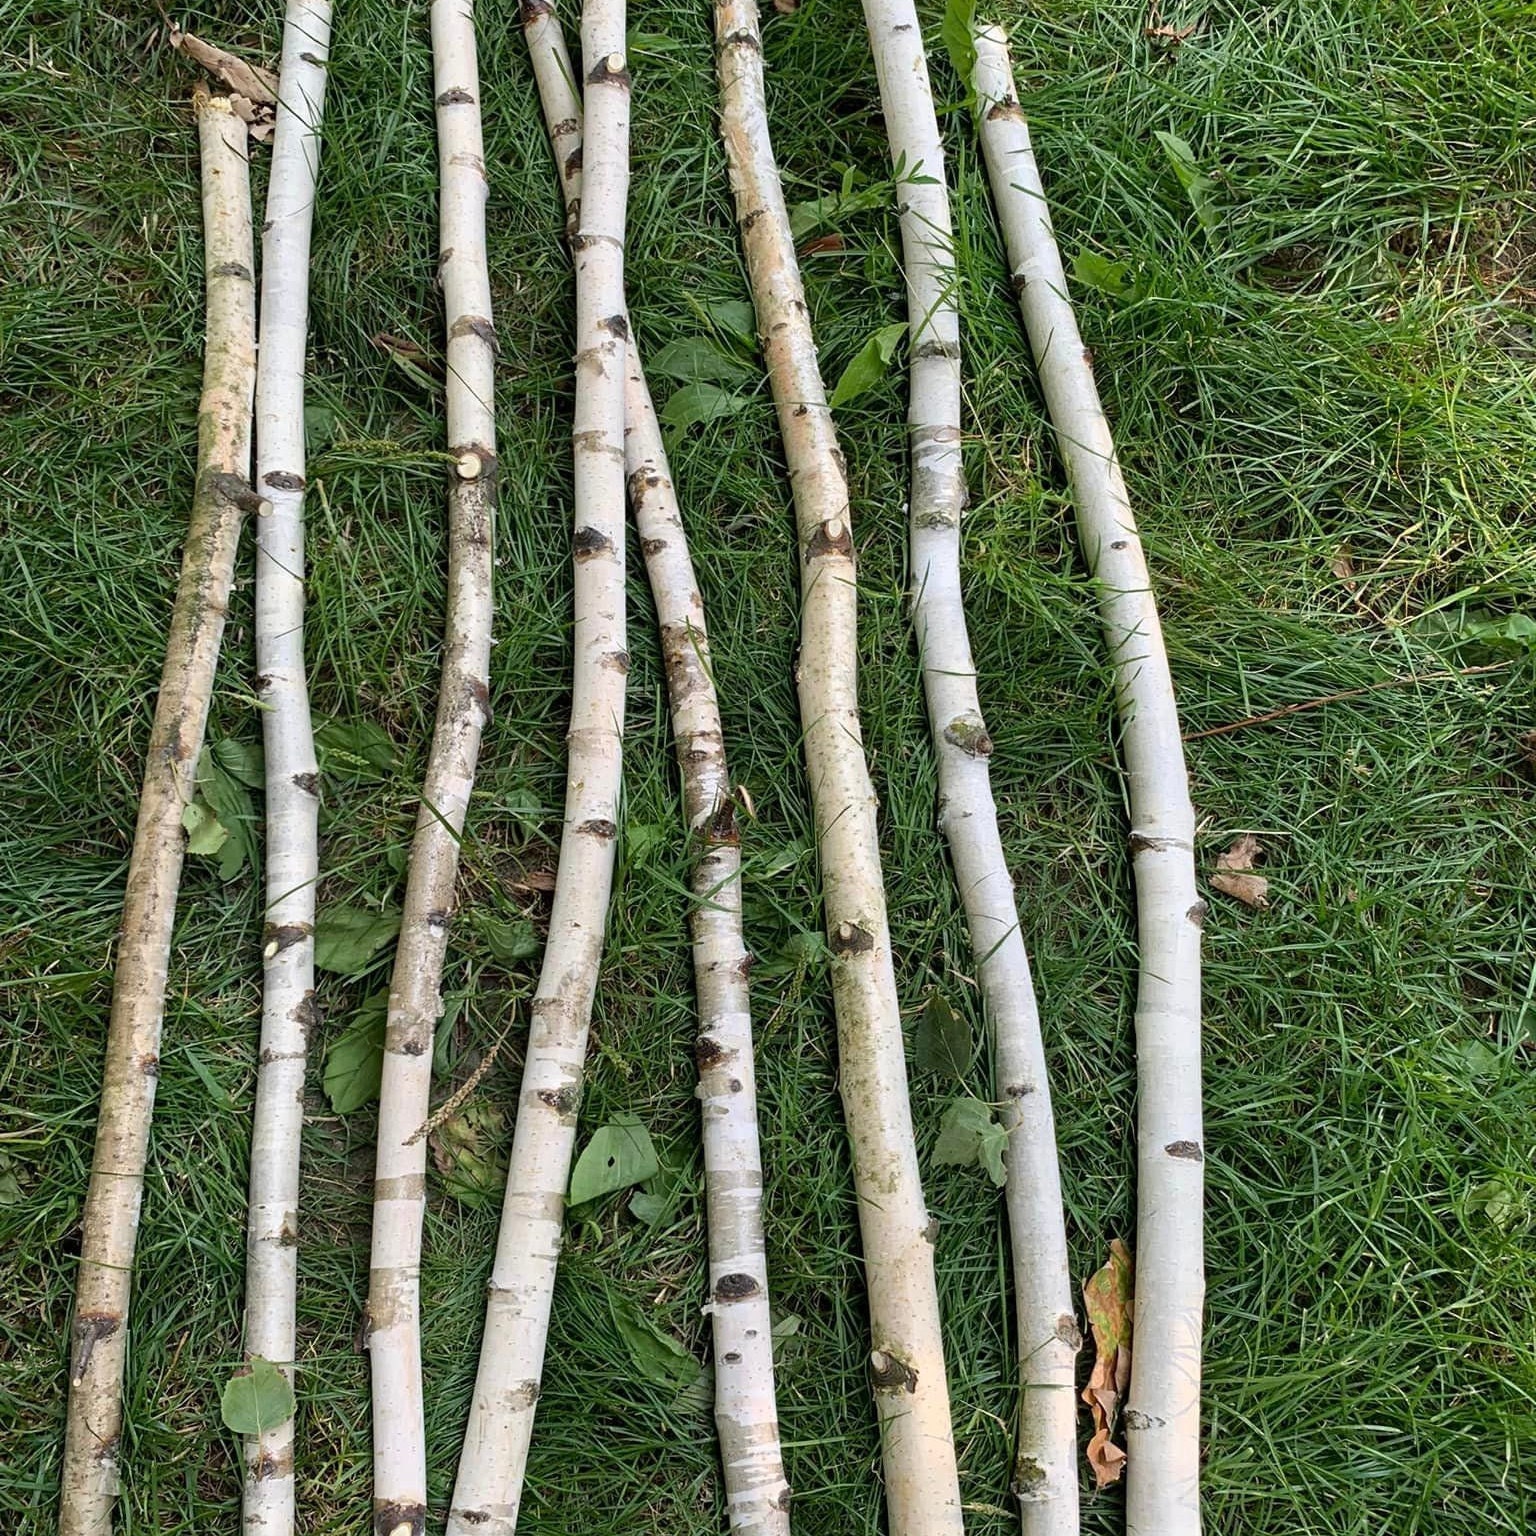 How to tie birch twigs before sauna